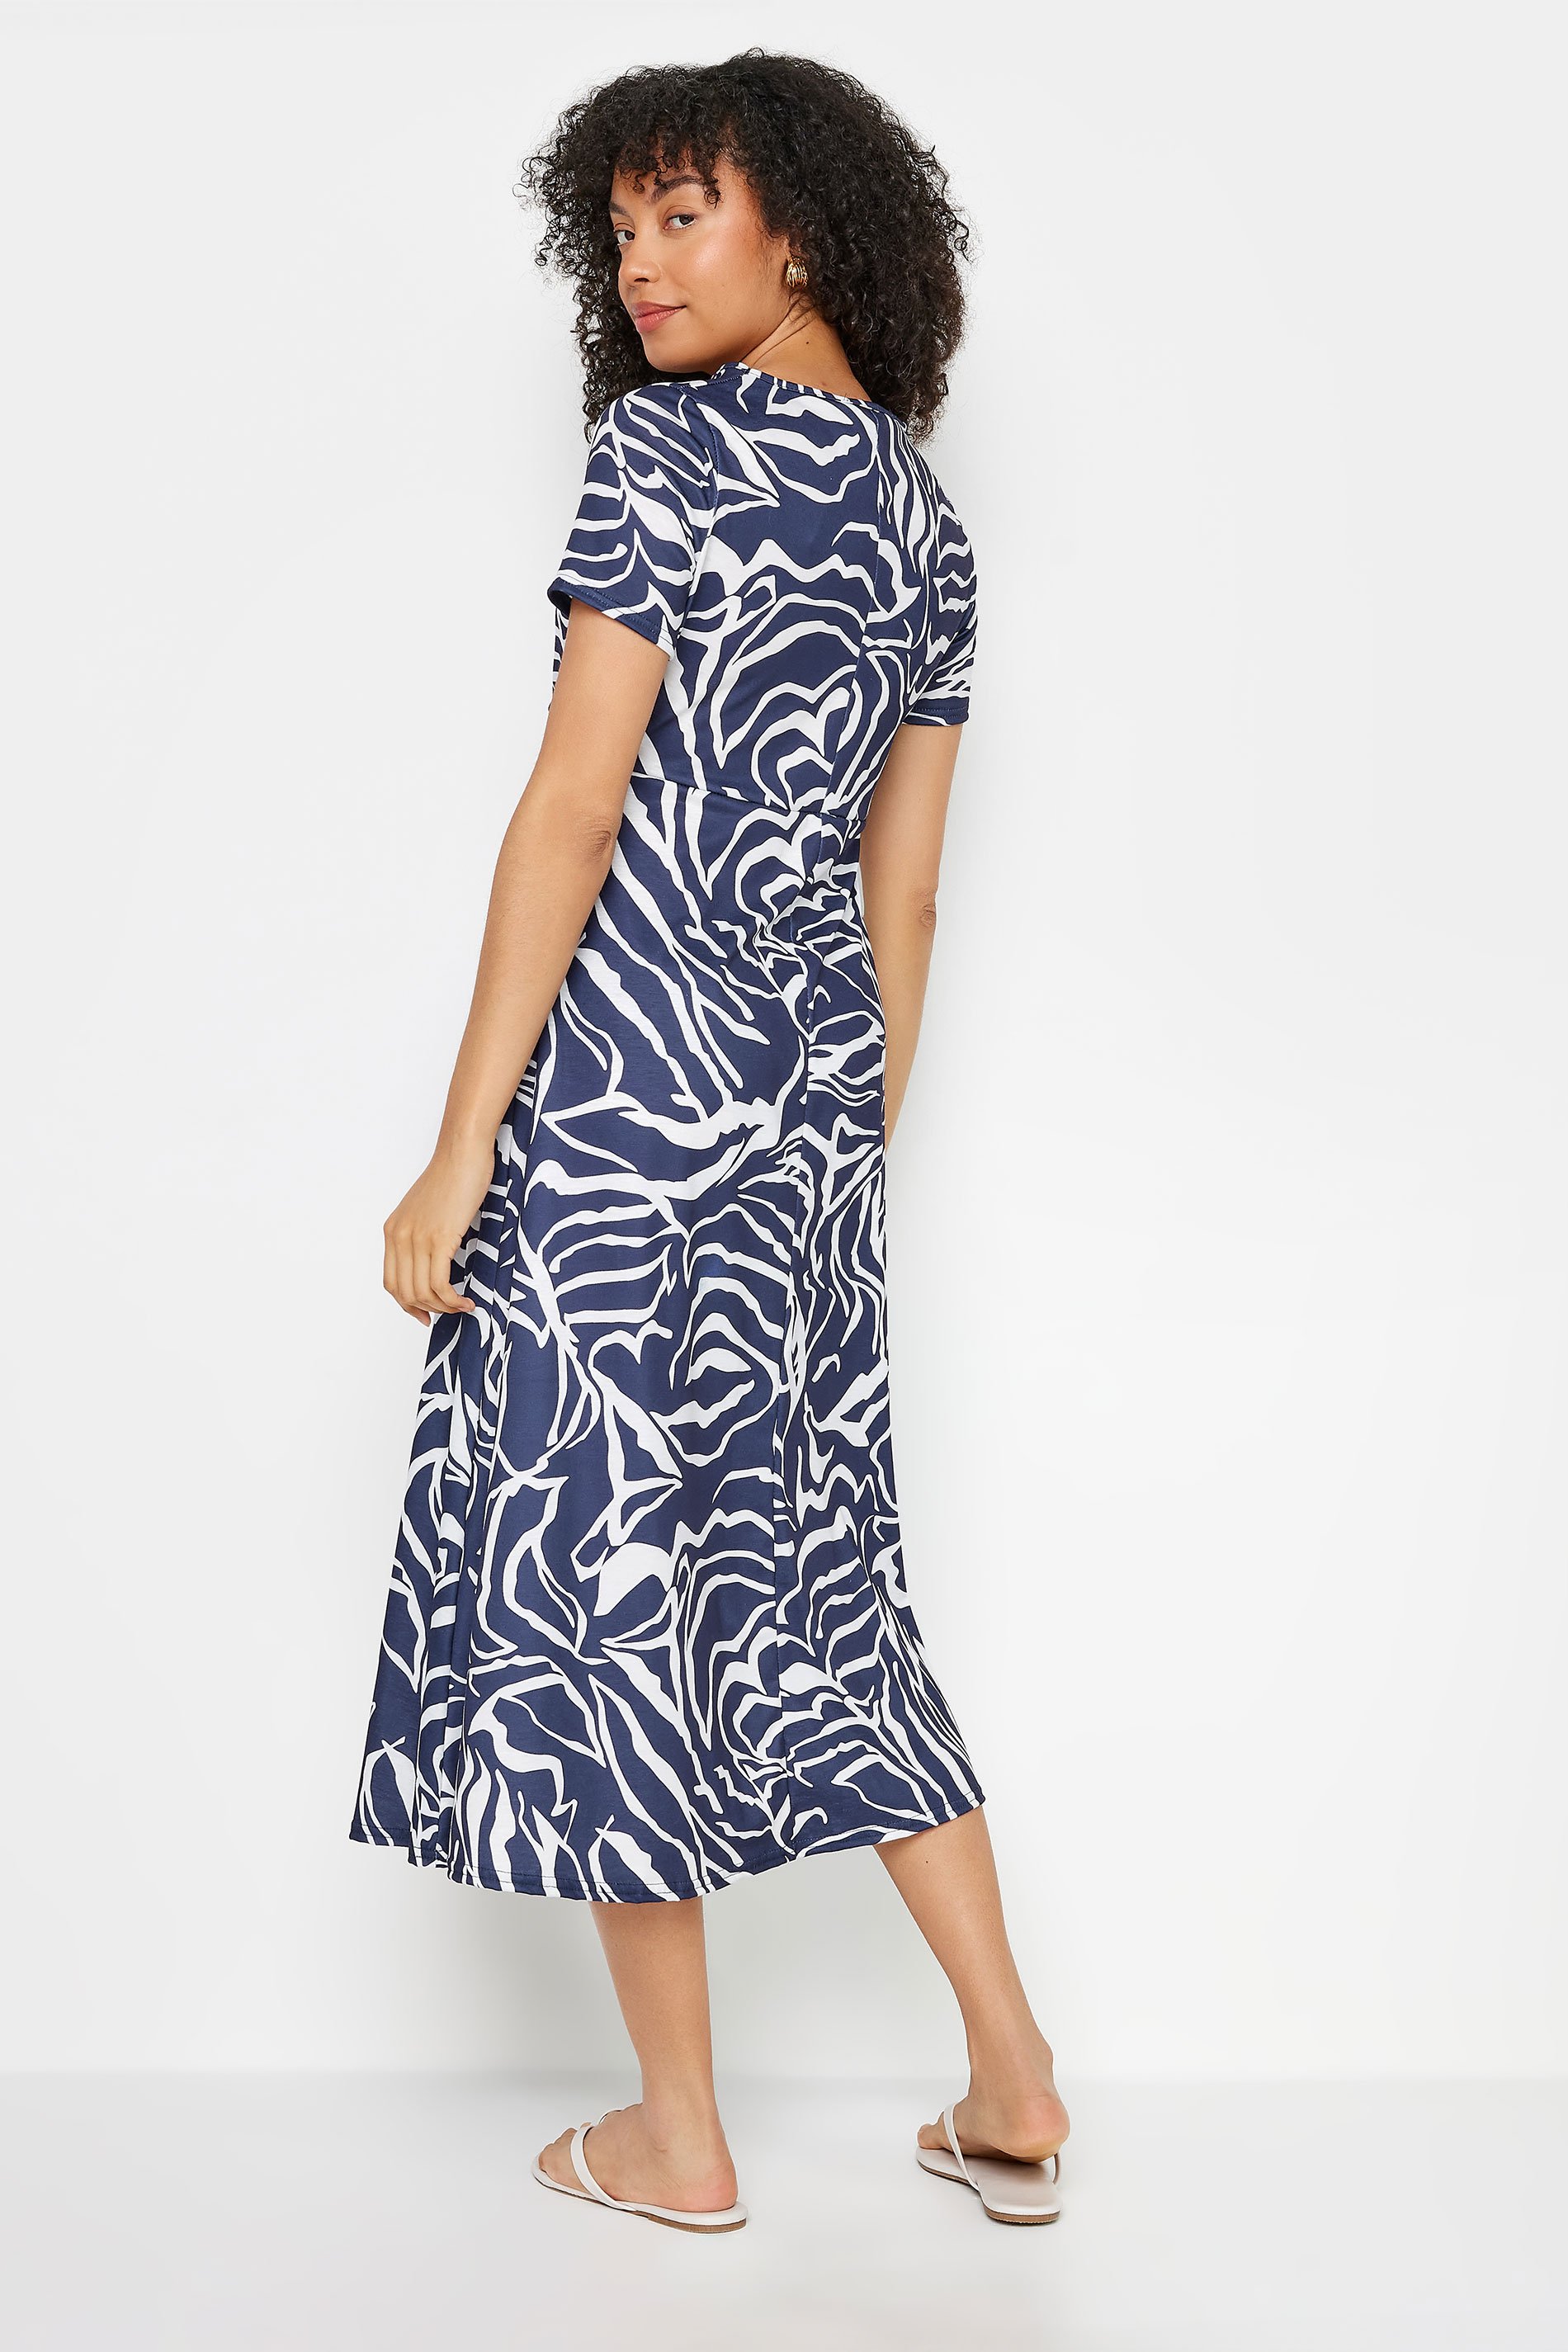 M&Co Navy Blue & White Abstract Print Short Sleeve Midi Dress | M&Co 3